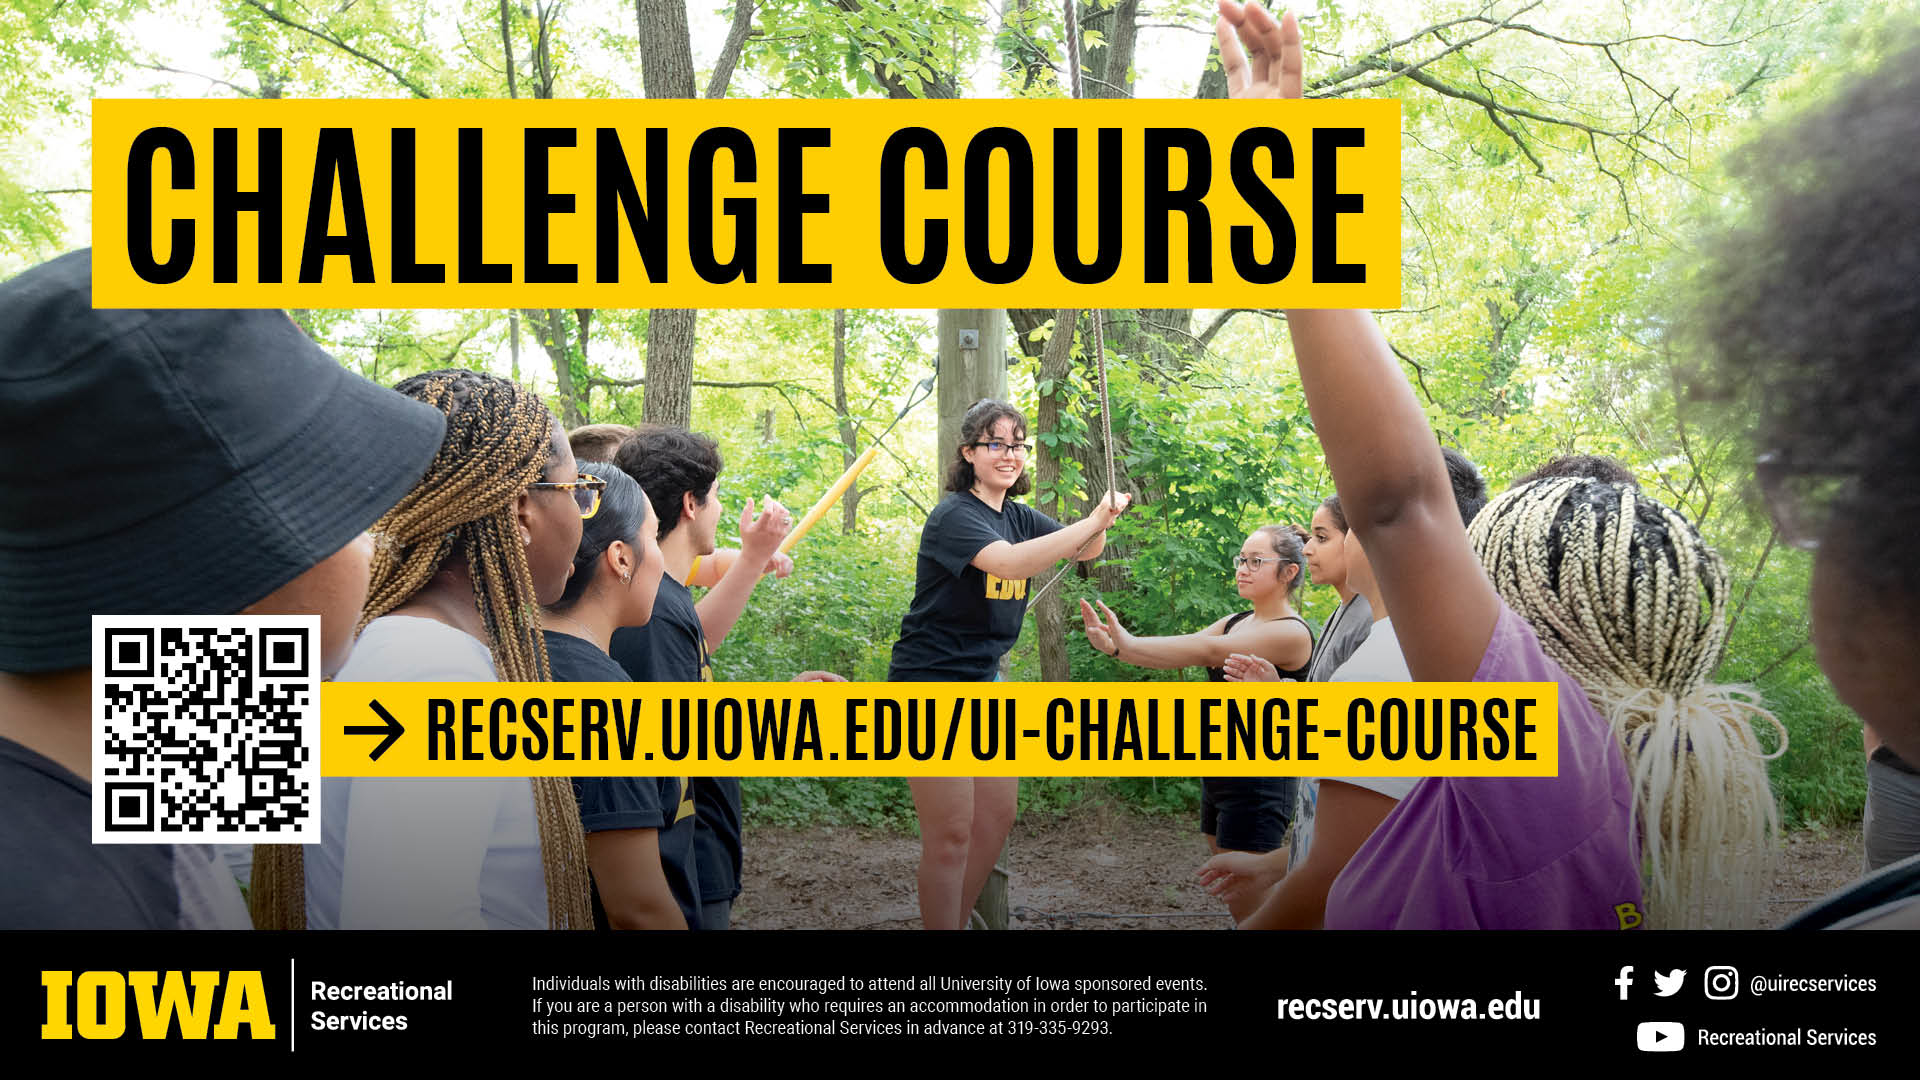 recserv.uiowa.edu/ui-challenge-course